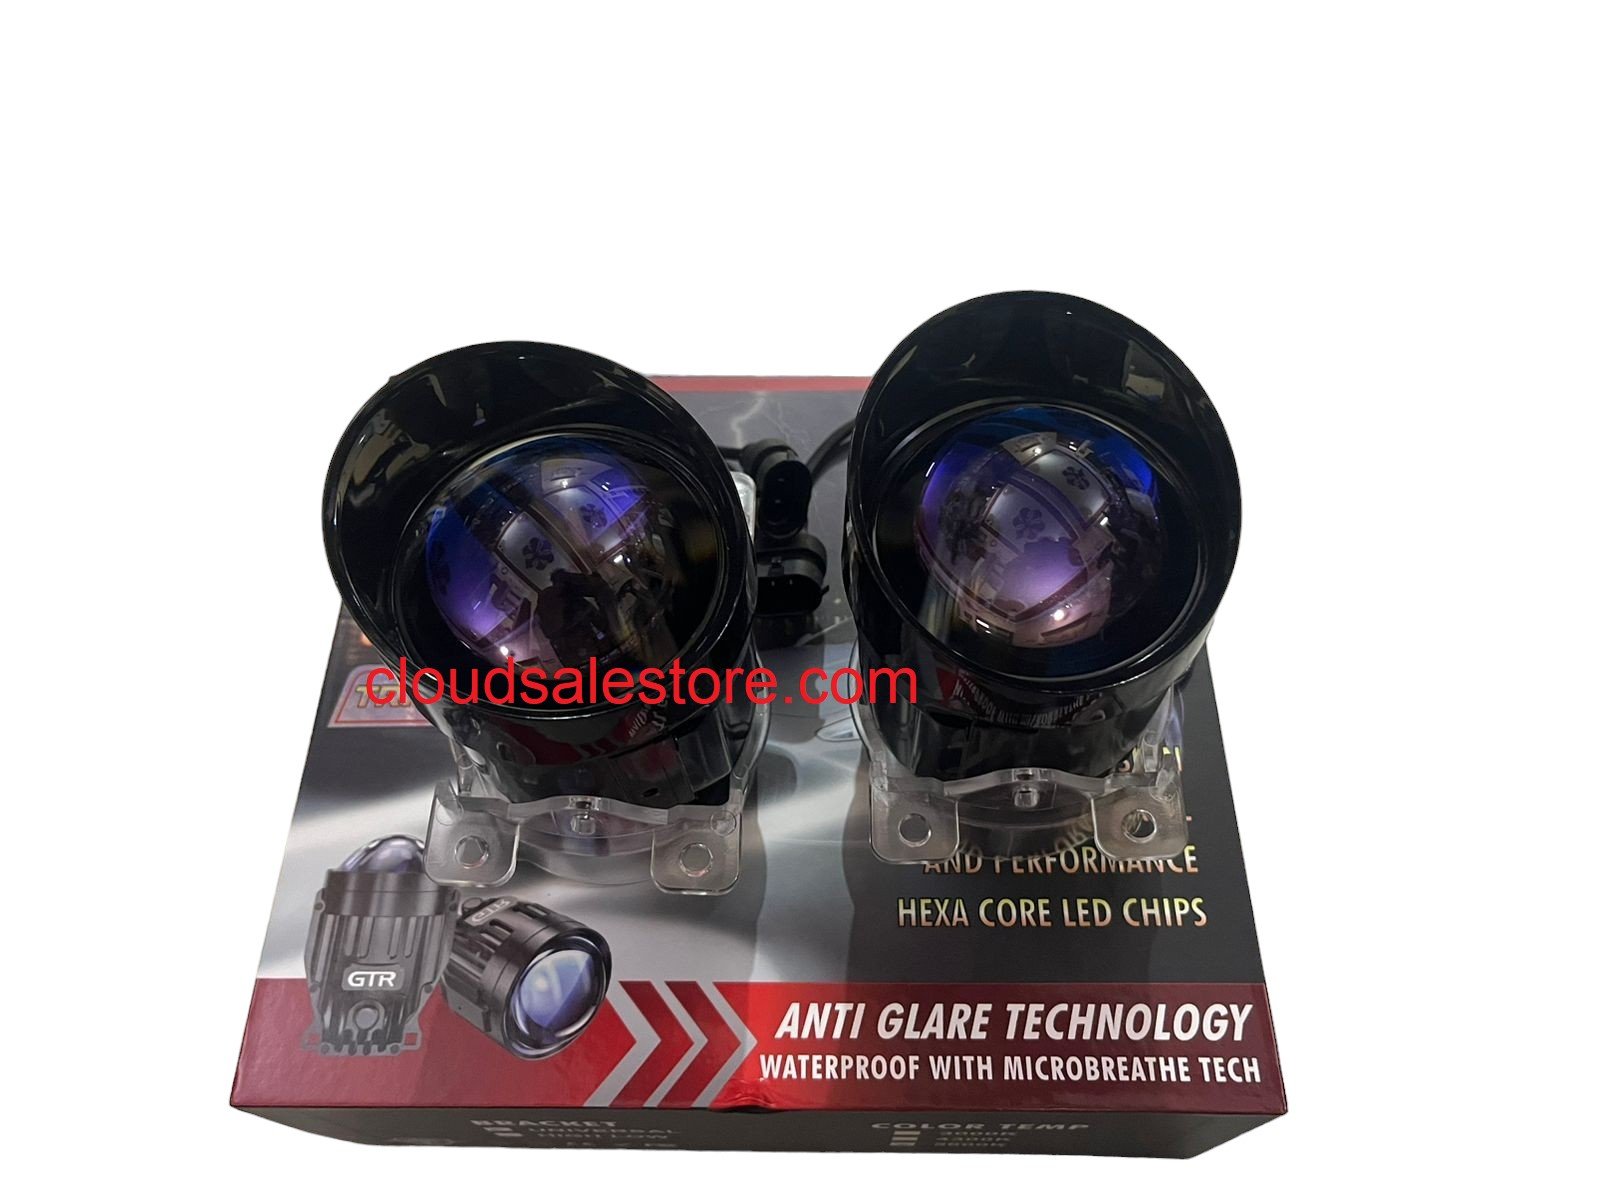 GTR F- A03 3inch BI-LED Tri- Color Fog Lamp Projector Lens 90/110watt High & Low Beam Universal For Car (Blue Lens) Image 